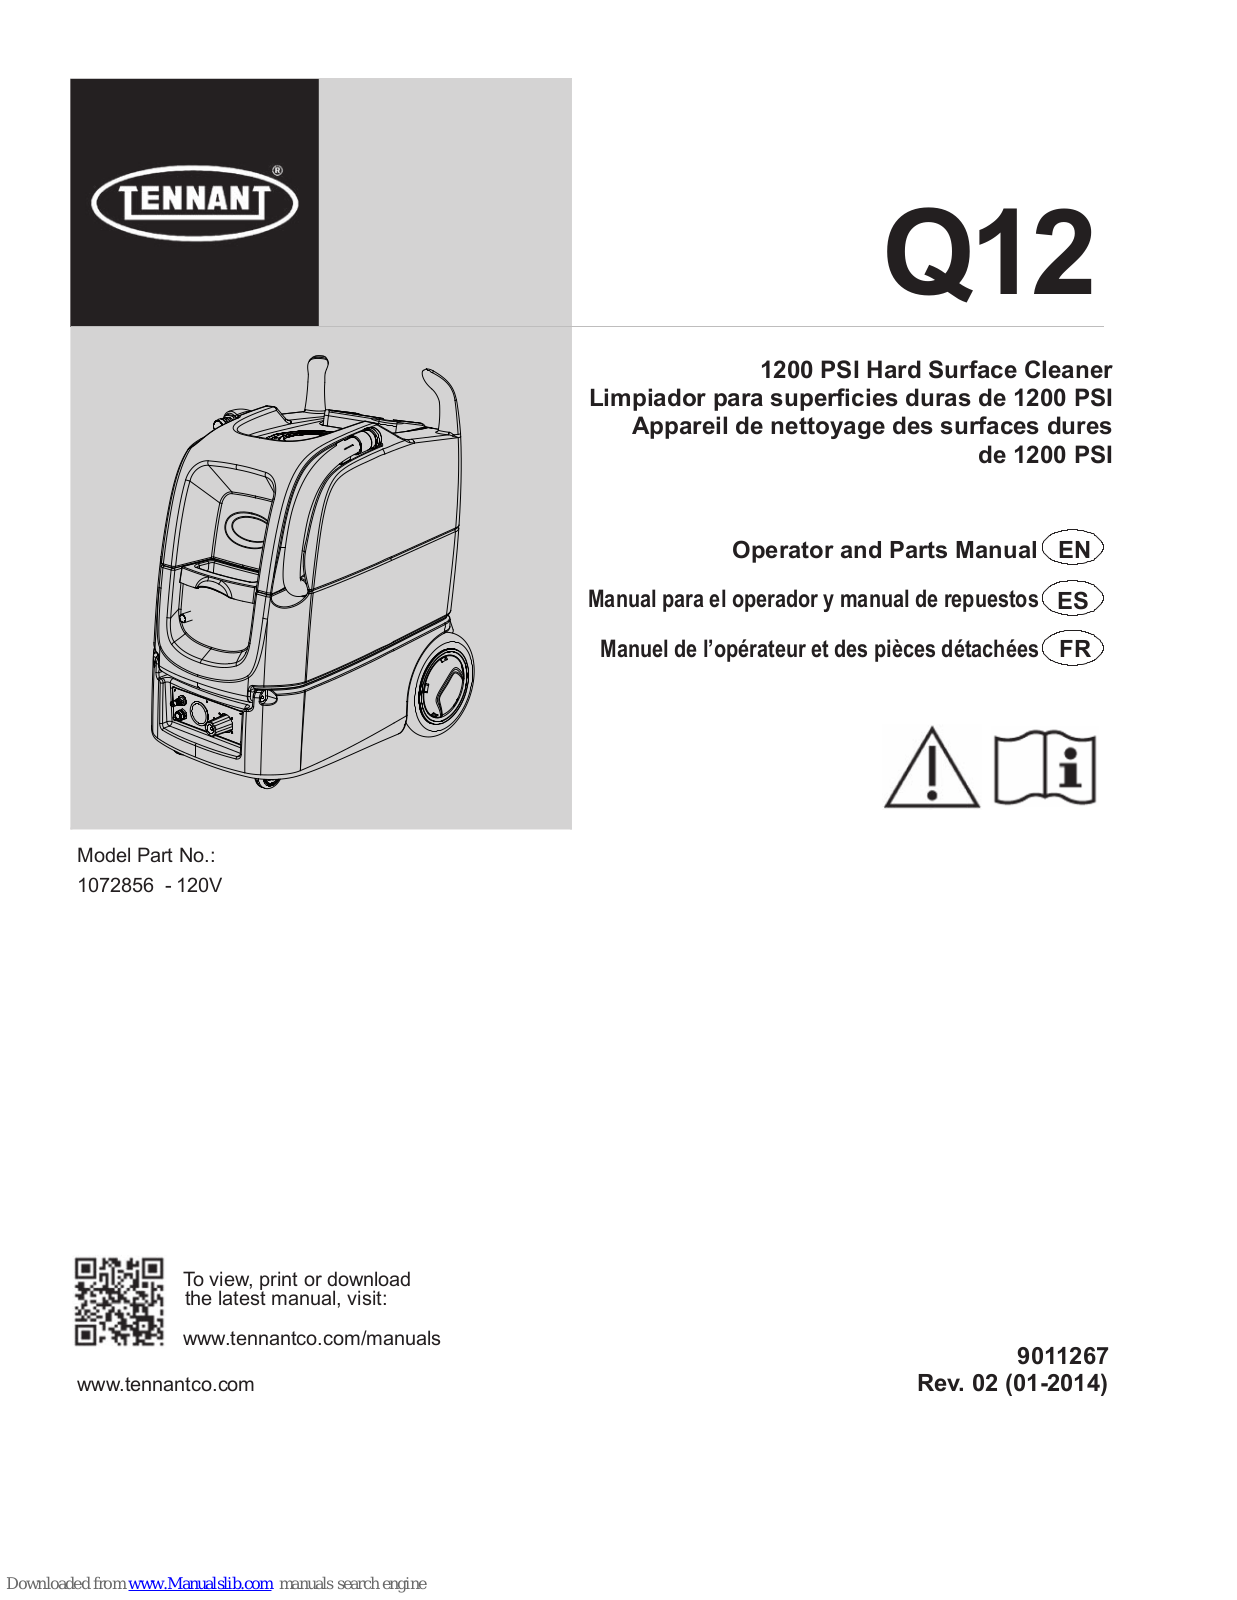 Tennant Q12 Operator And Parts Manual